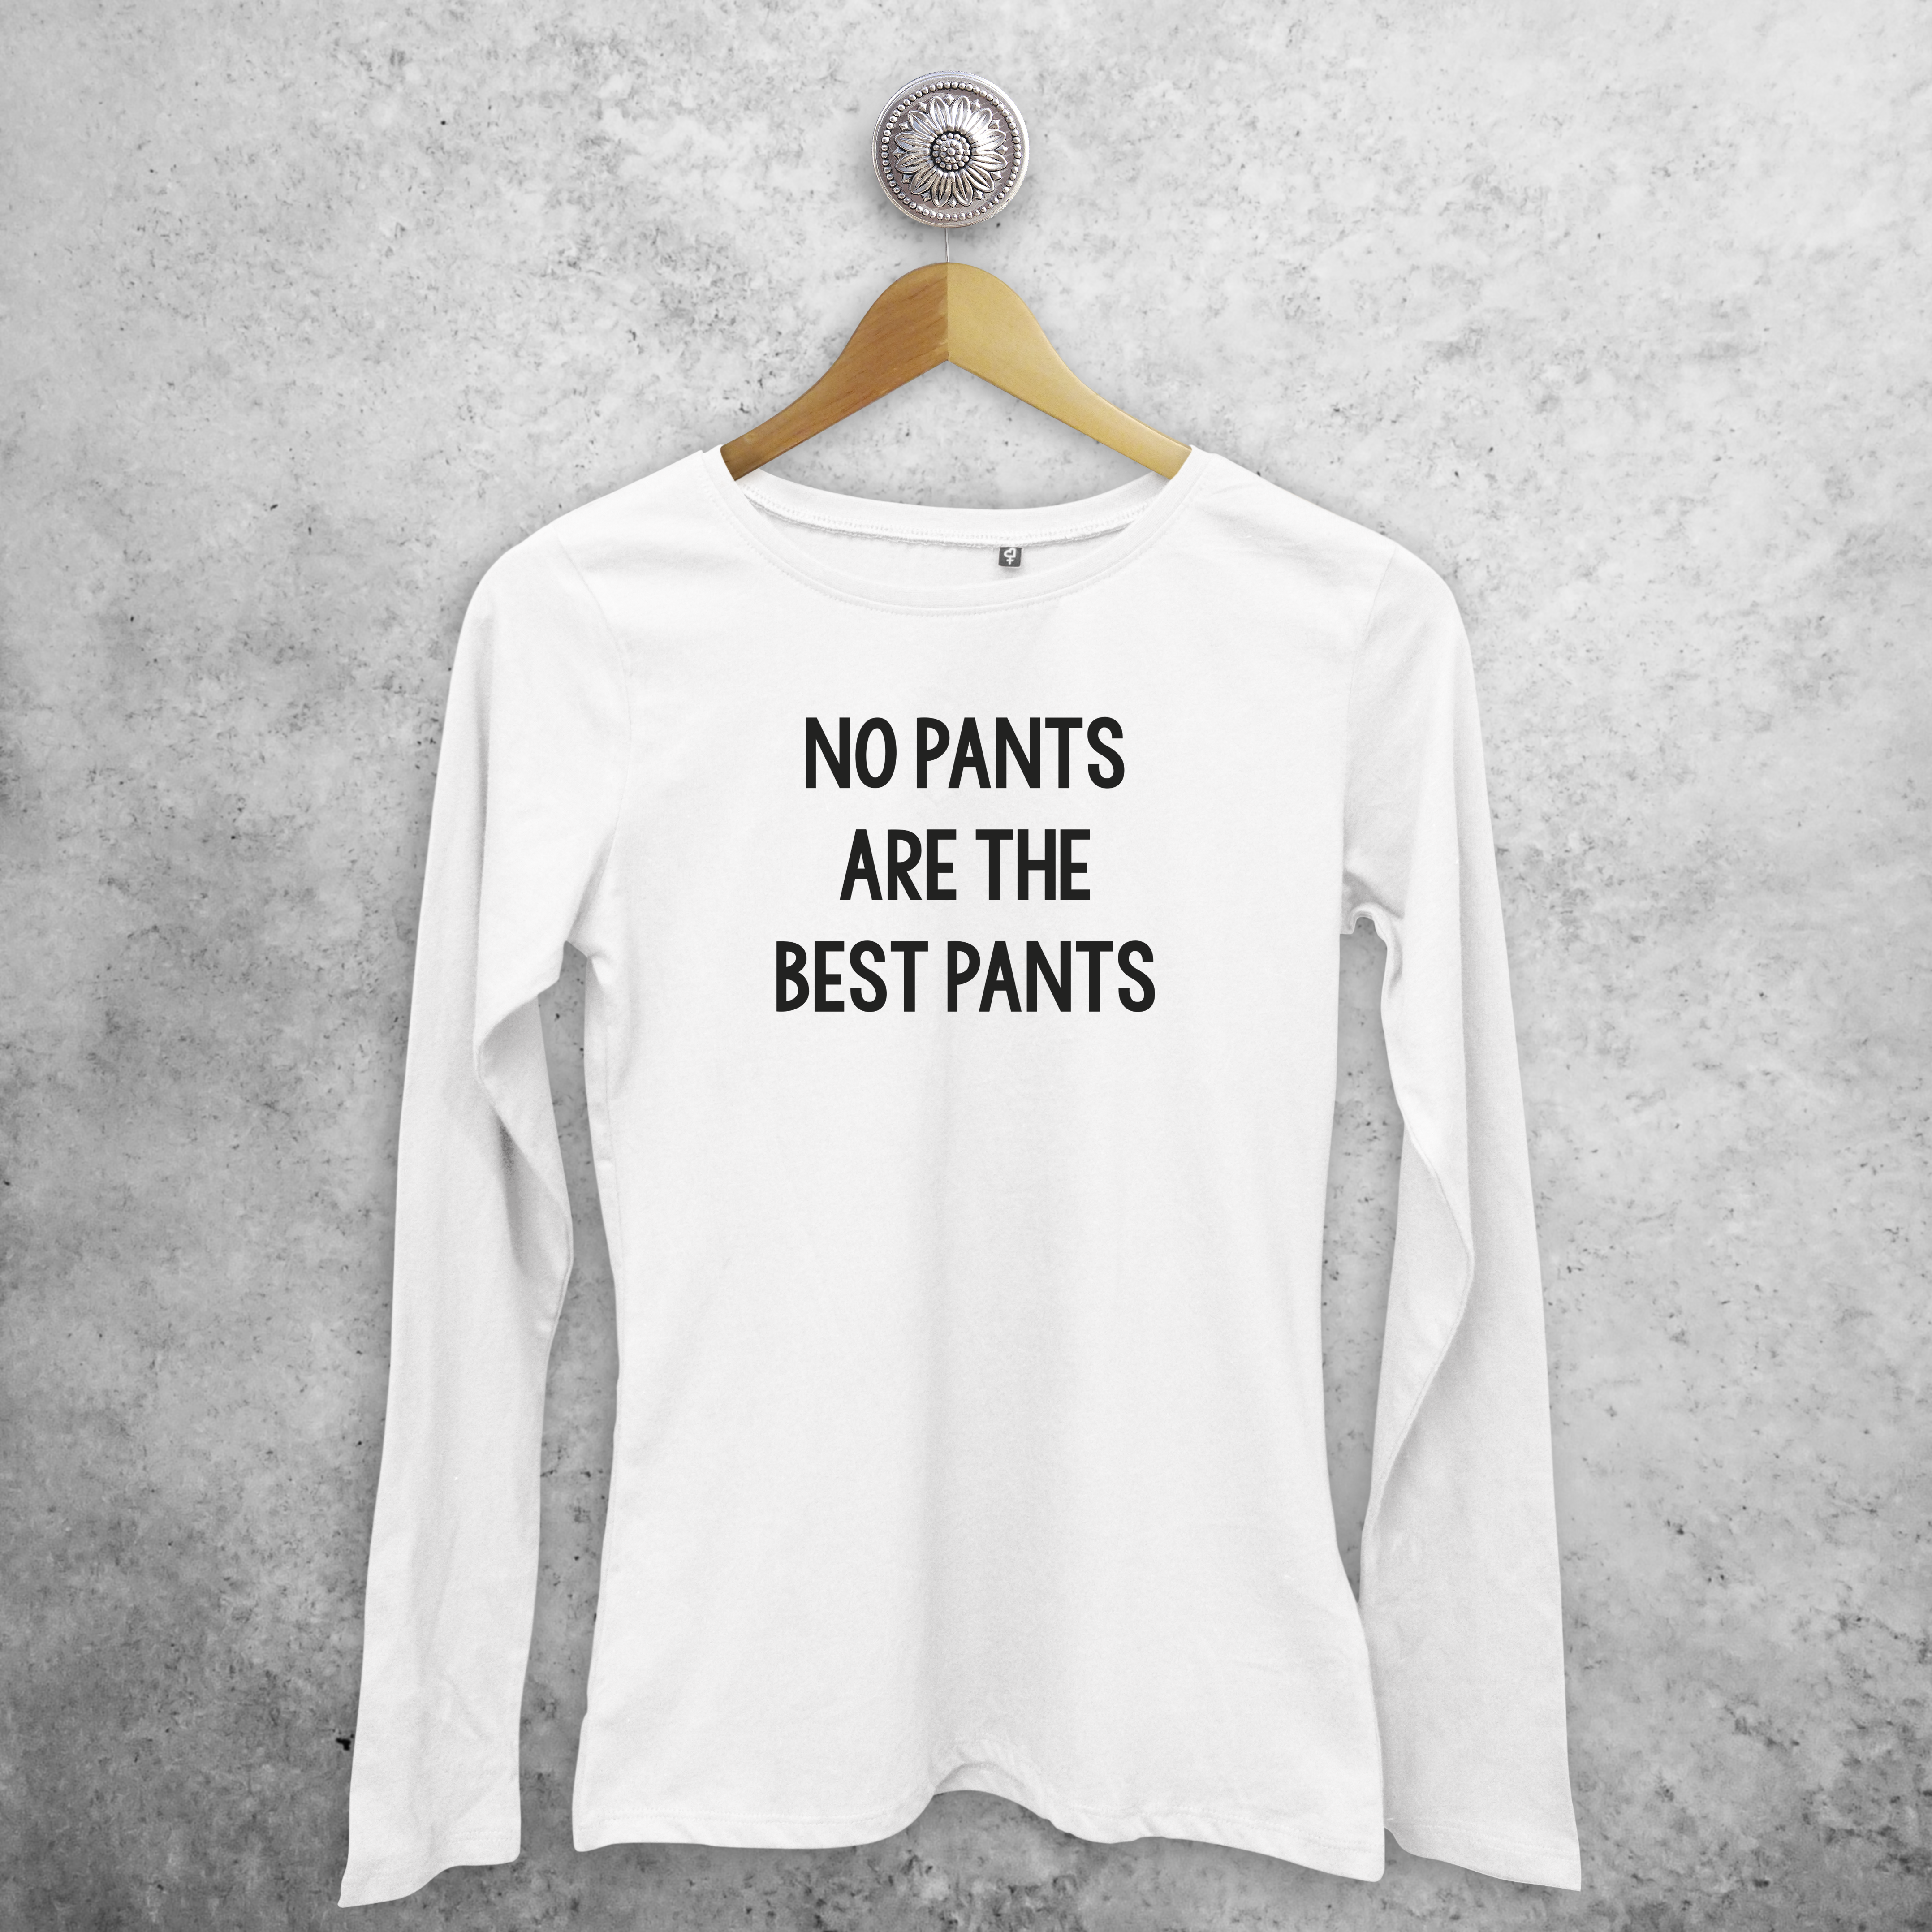 'No pants are the best pants' adult longsleeve shirt